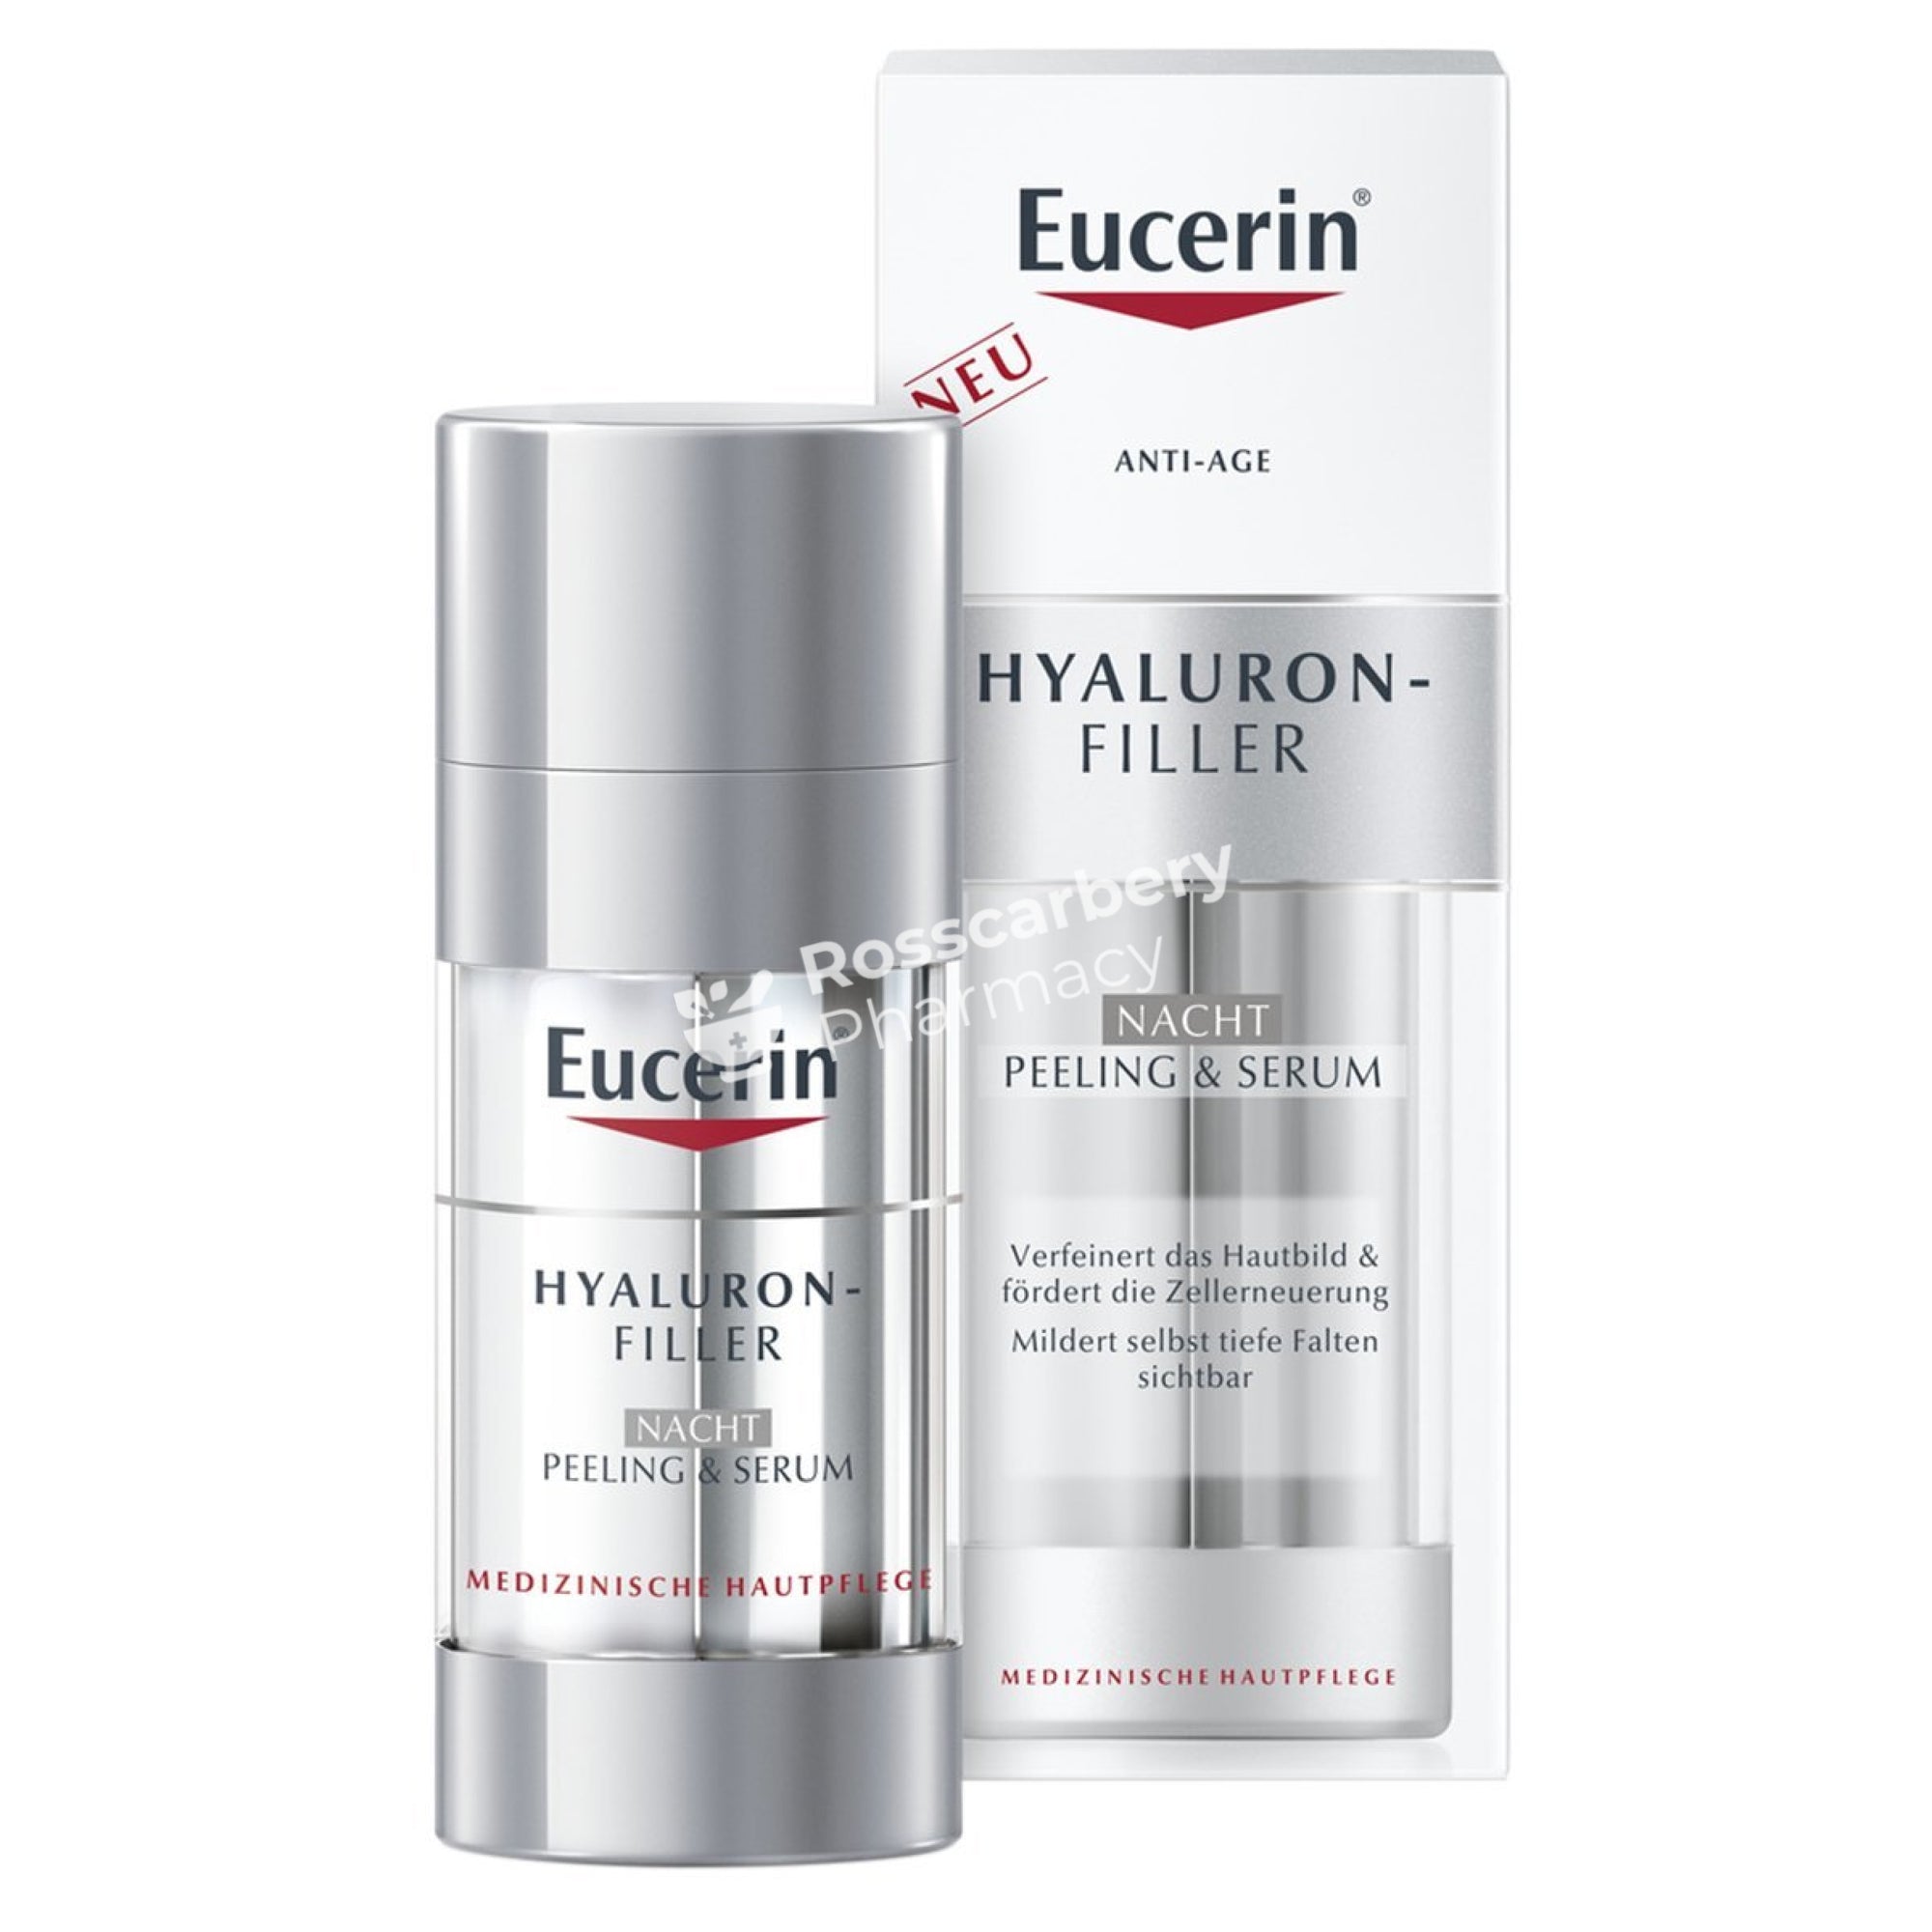 Eucerin Hyaluron-Filler Night Peeling & Serum Oils